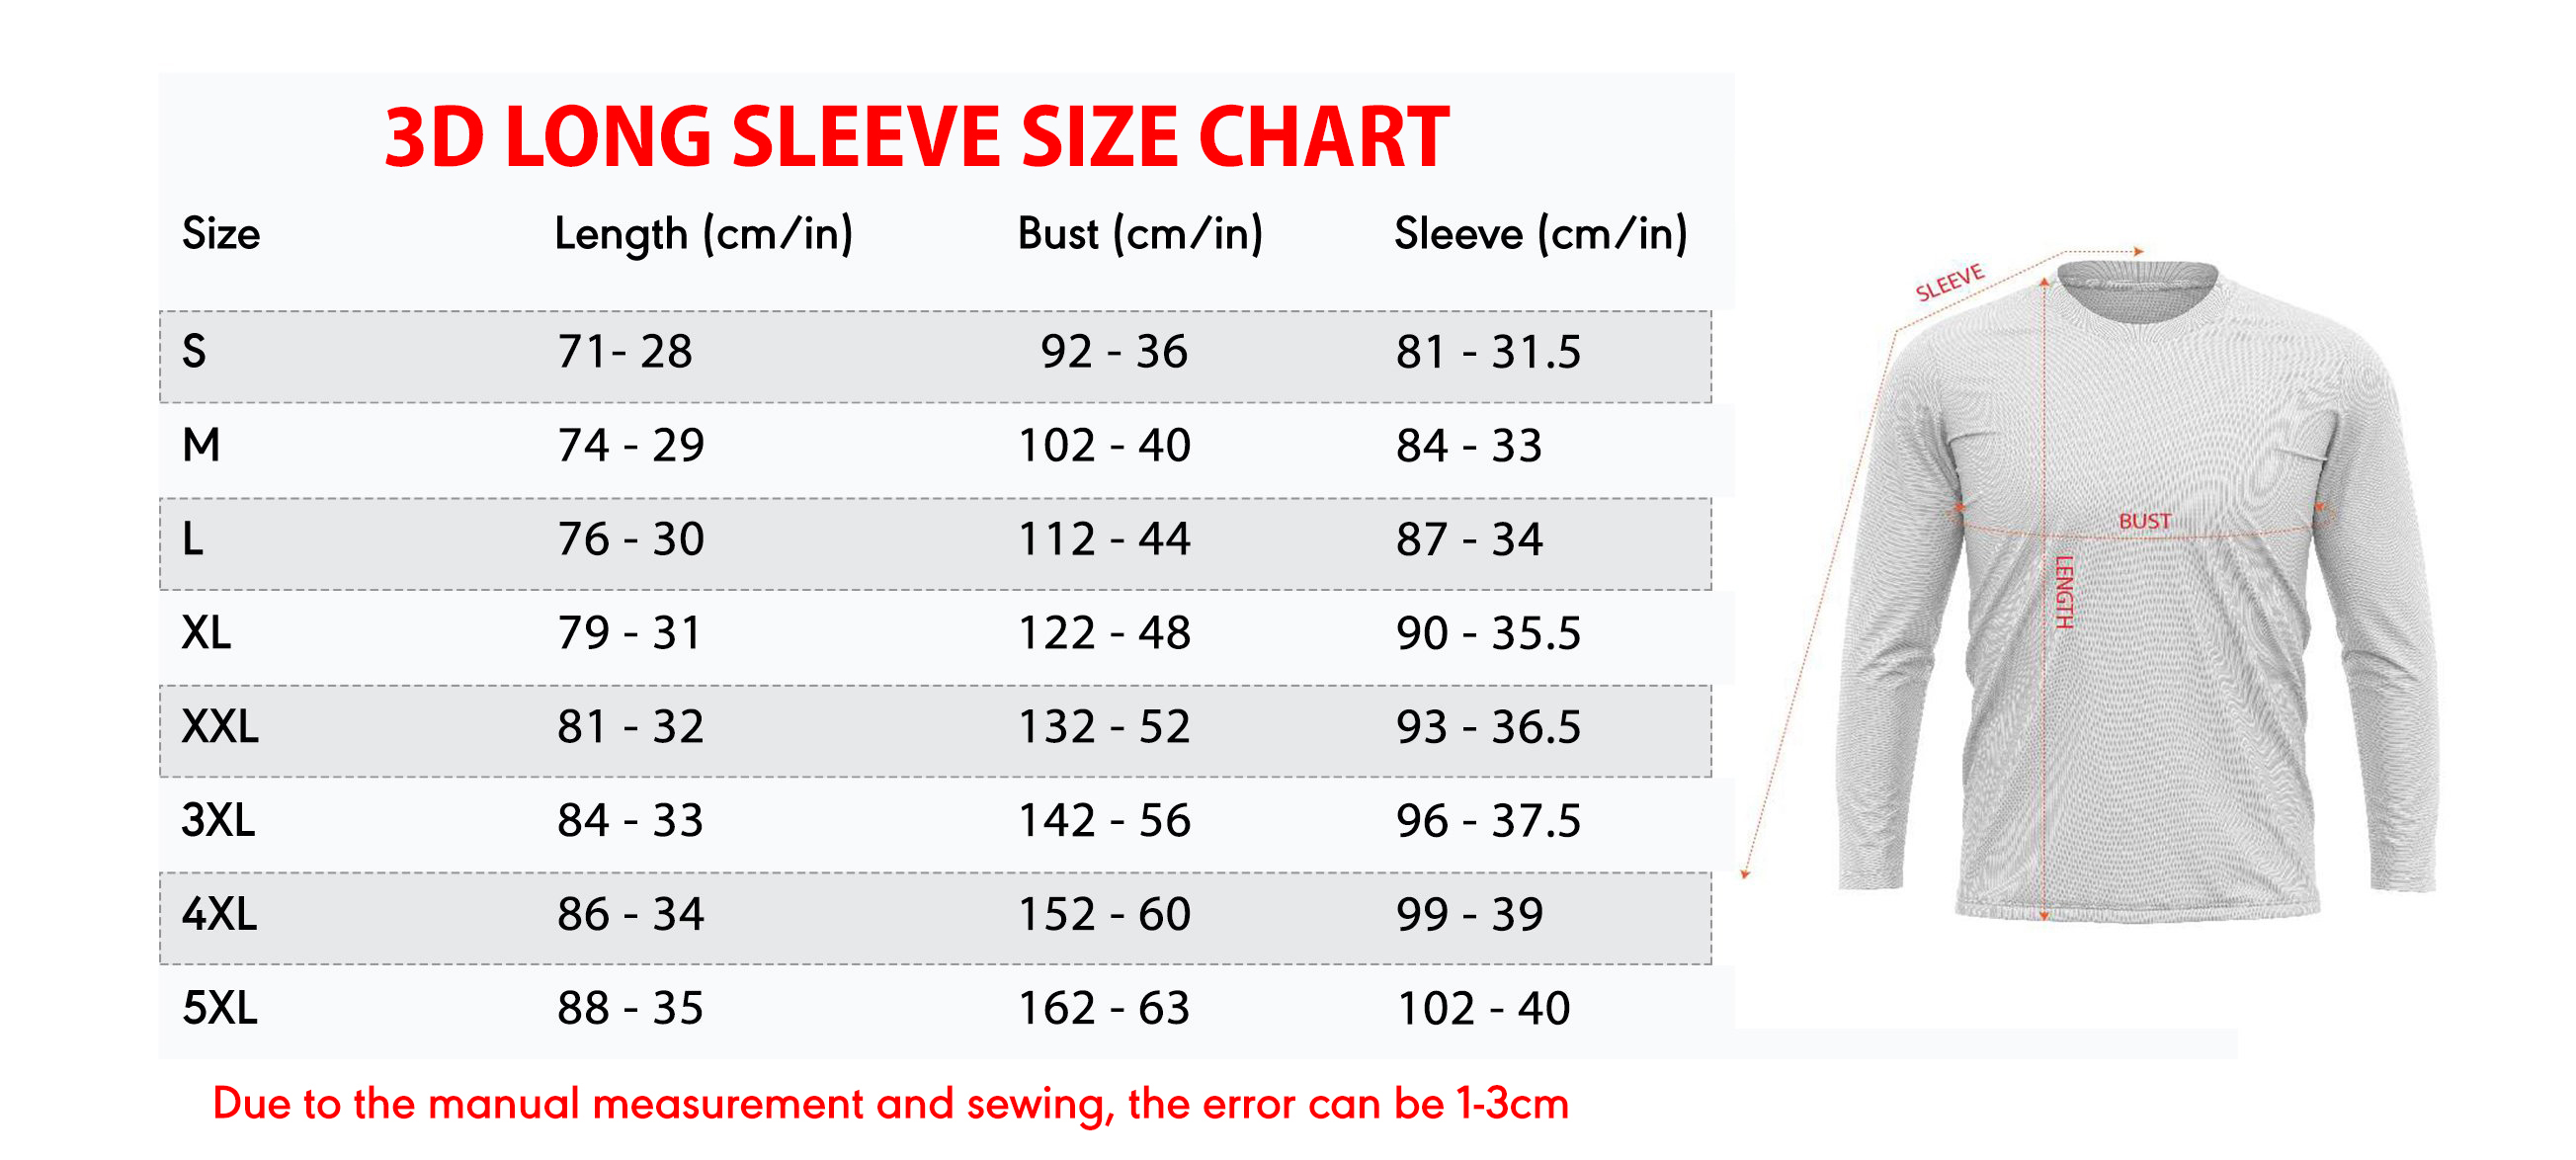 3D Long Sleeve Size Chart